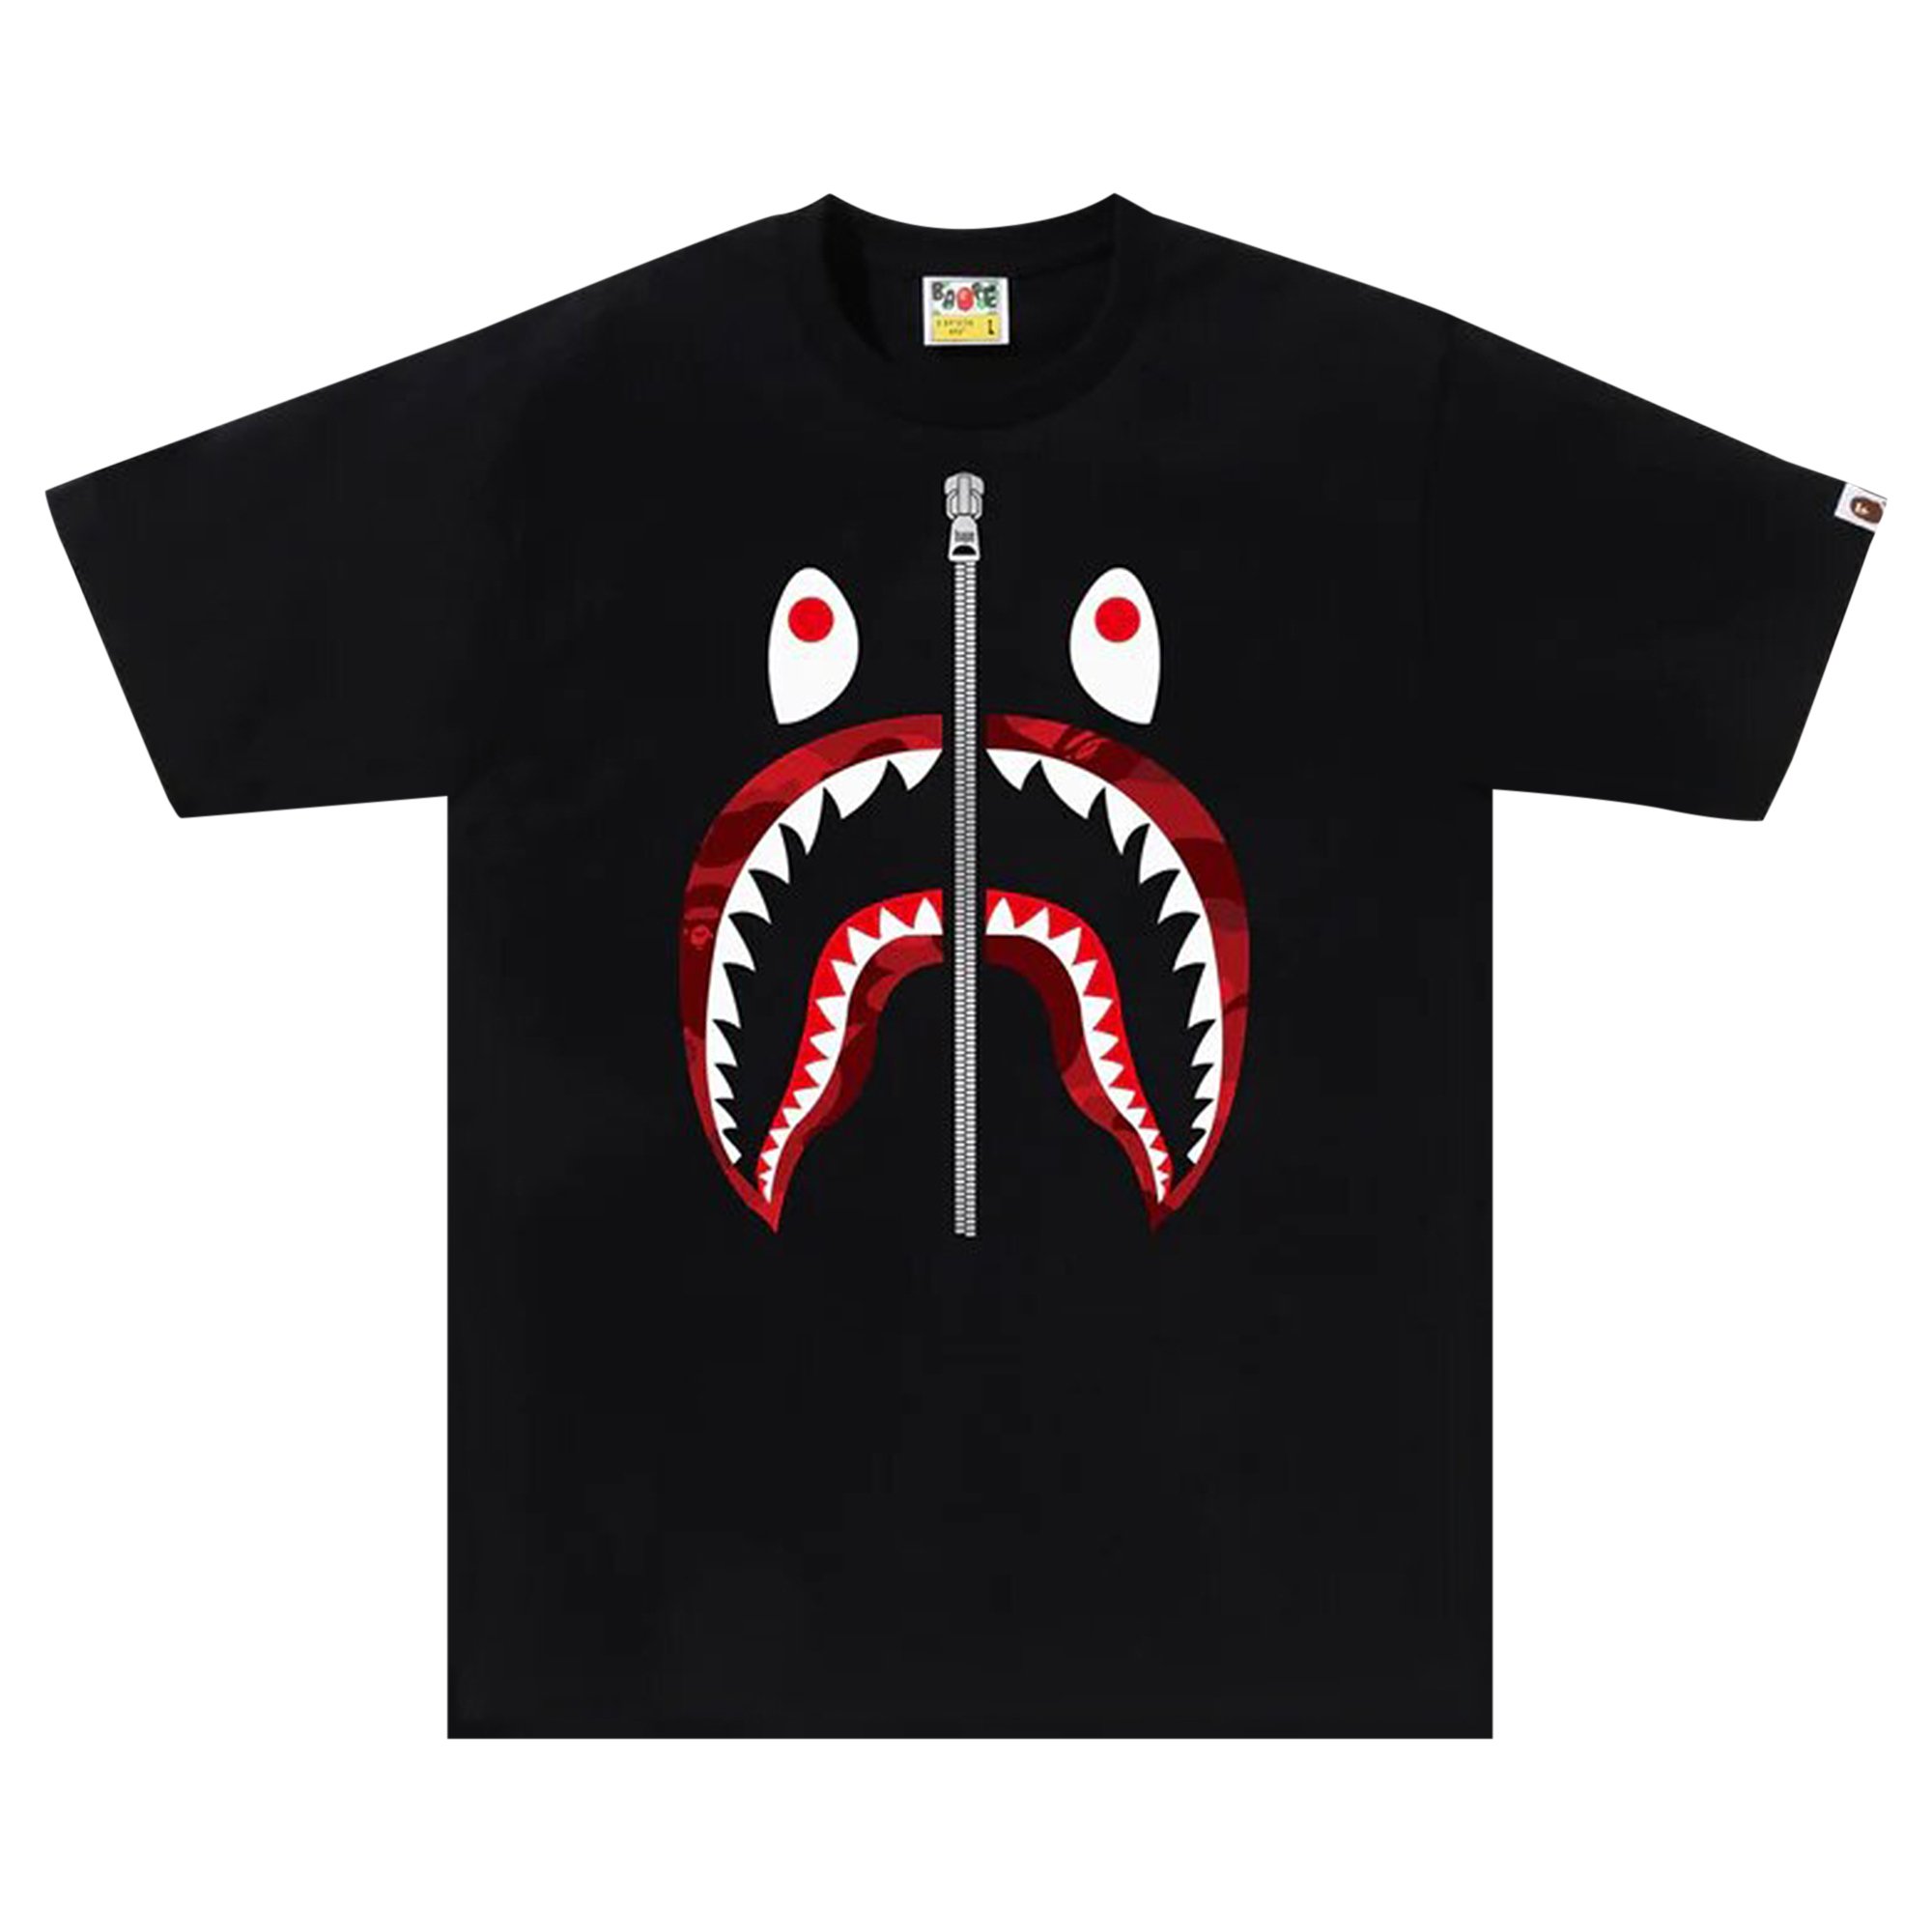 Buy BAPE Color Camo Shark Tee 'Black/Red' - 1J80 110 021 BLACK RED